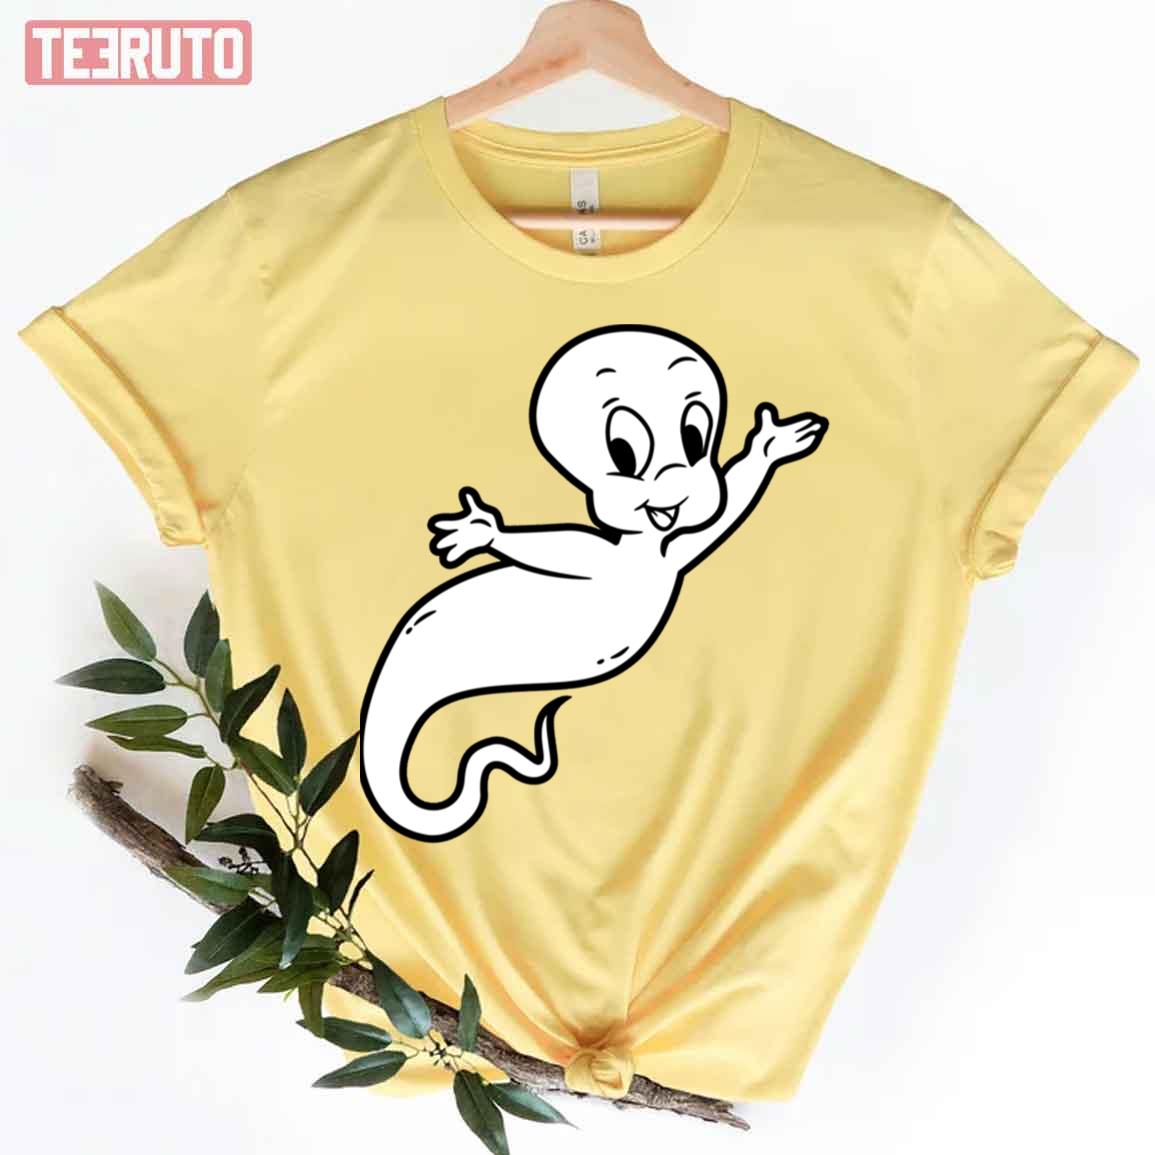 Casper The Ghost Cute Cartoon Unisex T-Shirt